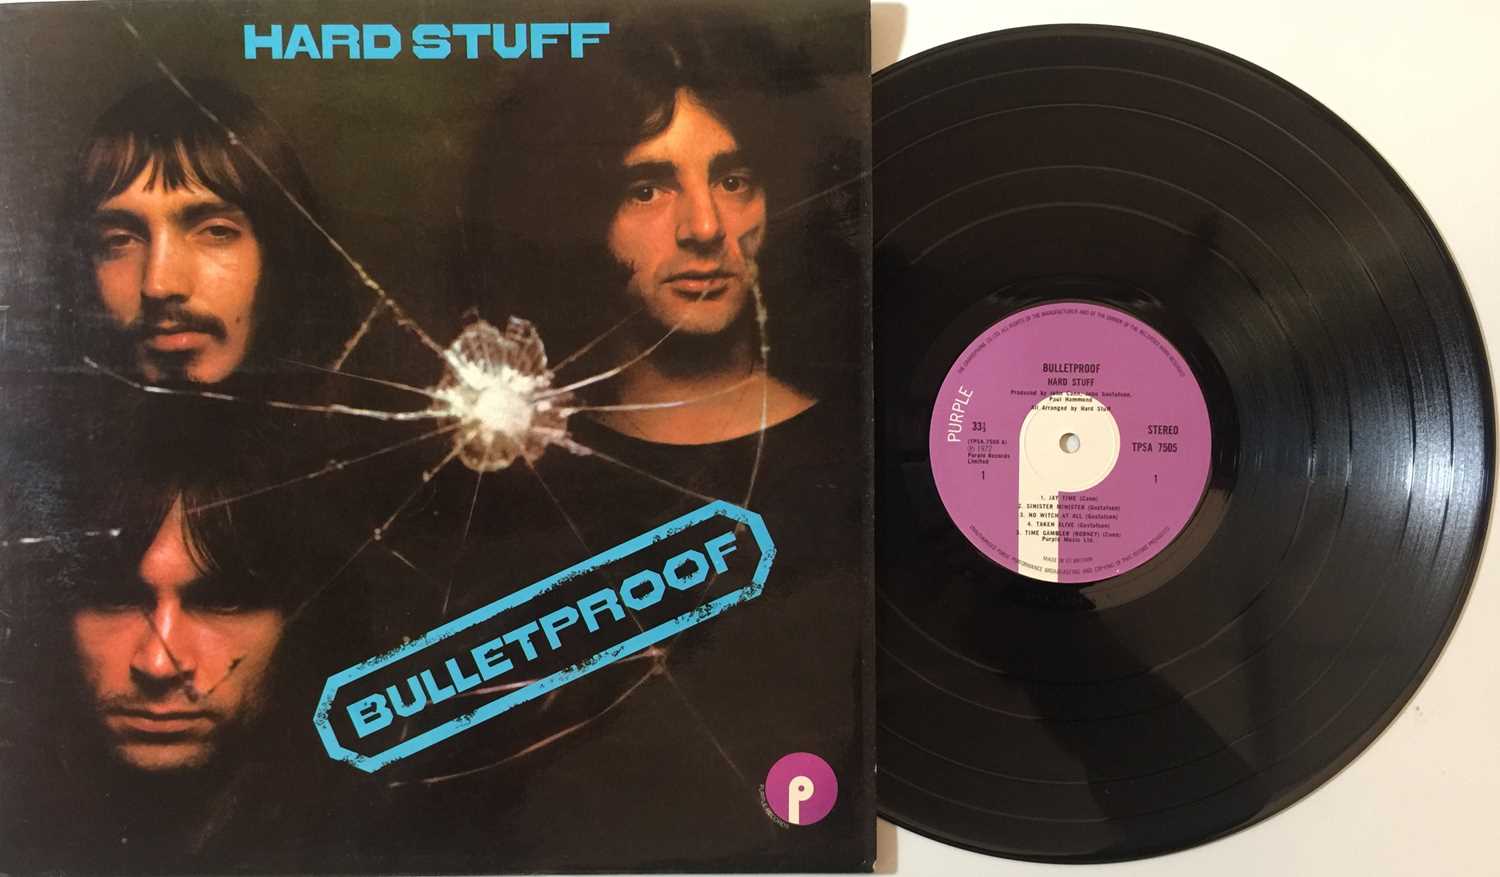 Lot 20 - HARD STUFF - BULLETPROOF LP (ORIGINAL UK PRESSING - PURPLE RECORDS TPSA 7505)